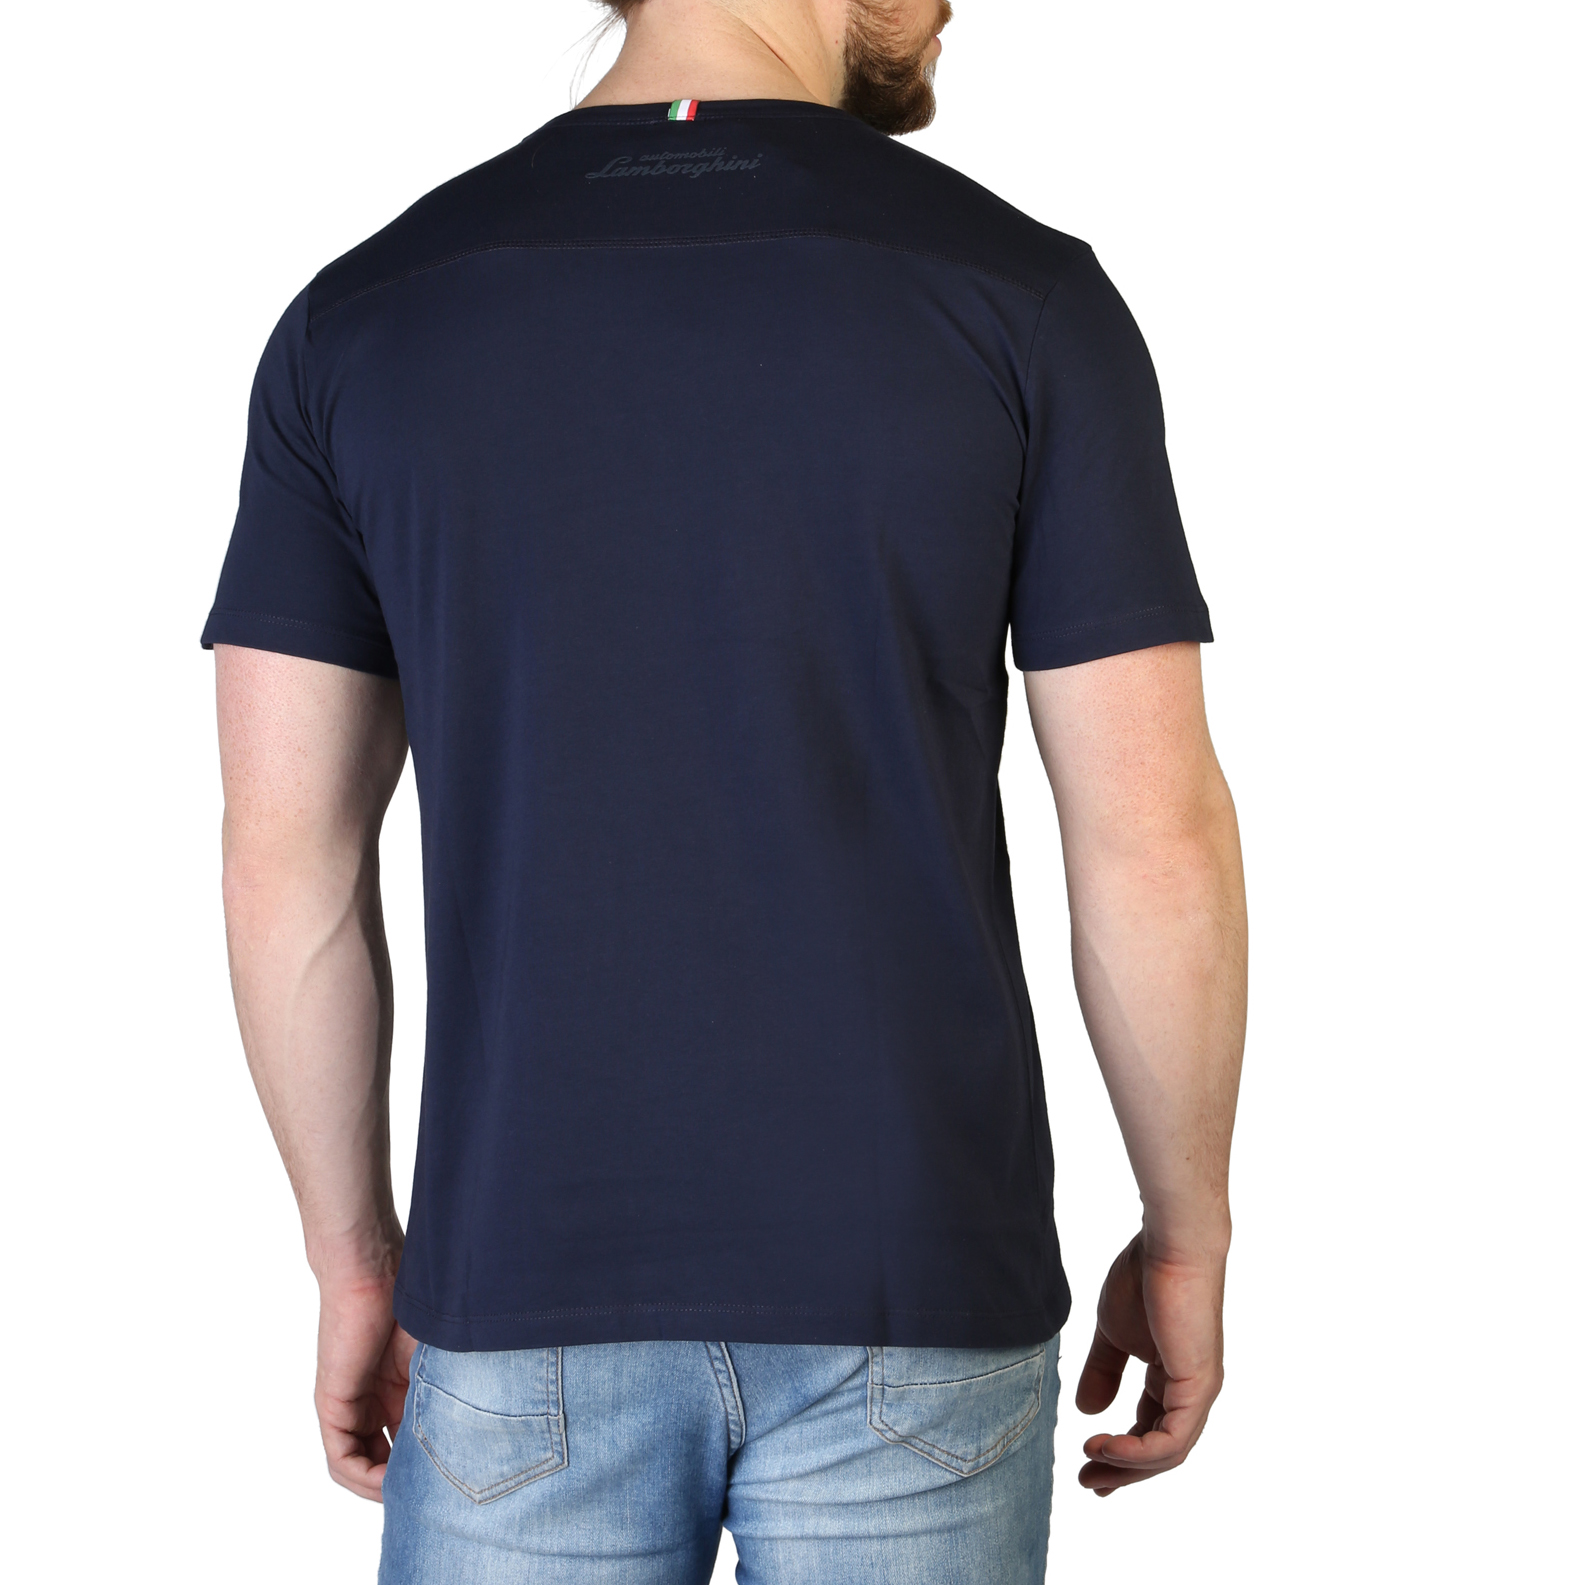 Lamborghini blu T-shirts for Men - B3XUB7S3